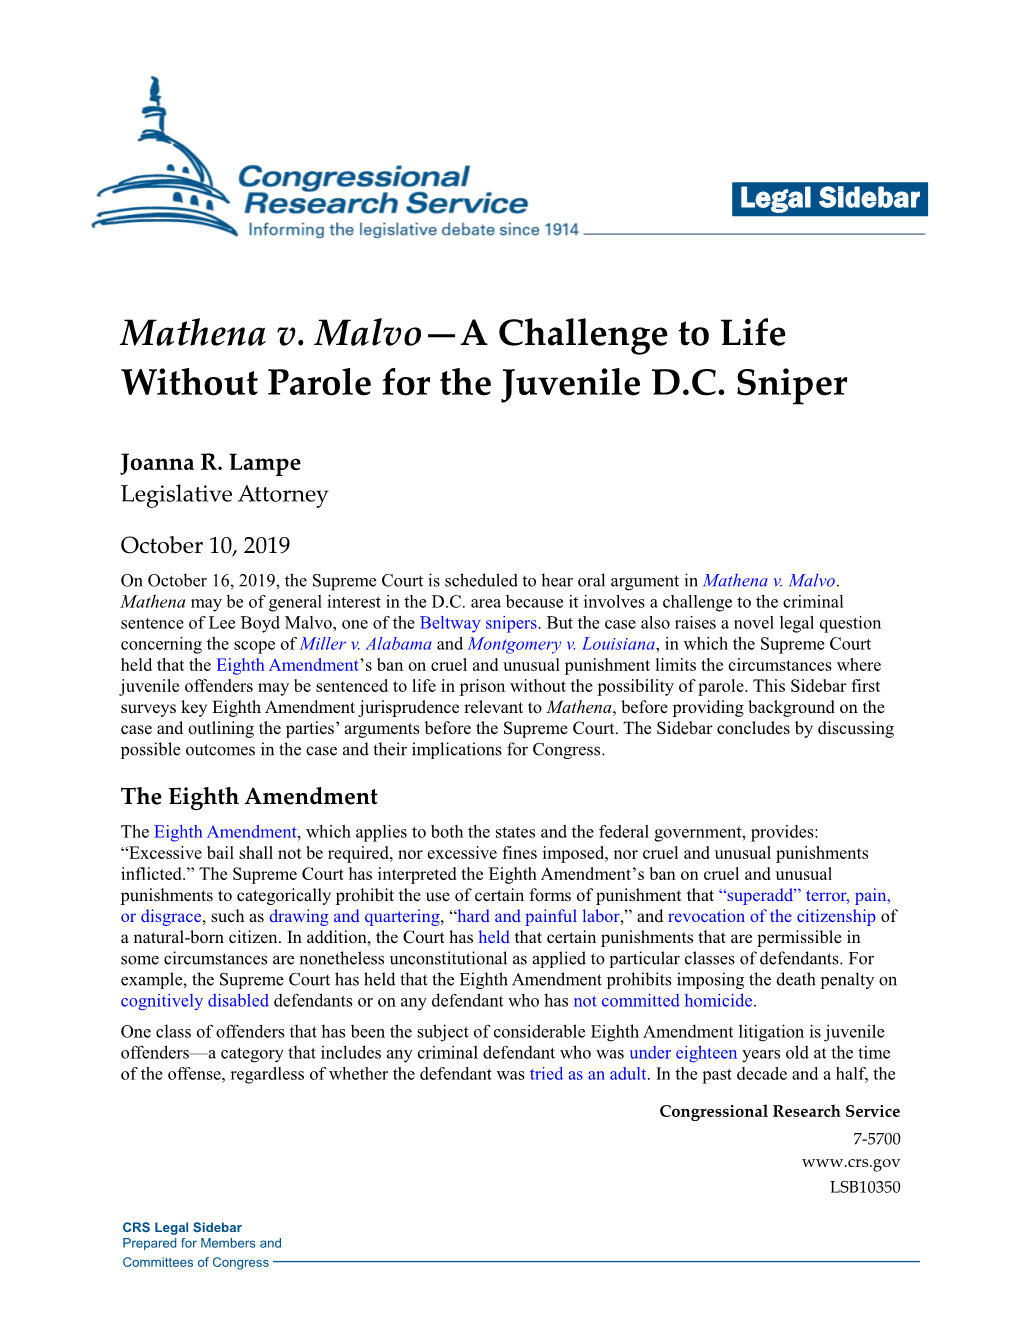 Mathena V. Malvo—A Challenge to Life Without Parole for the Juvenile D.C